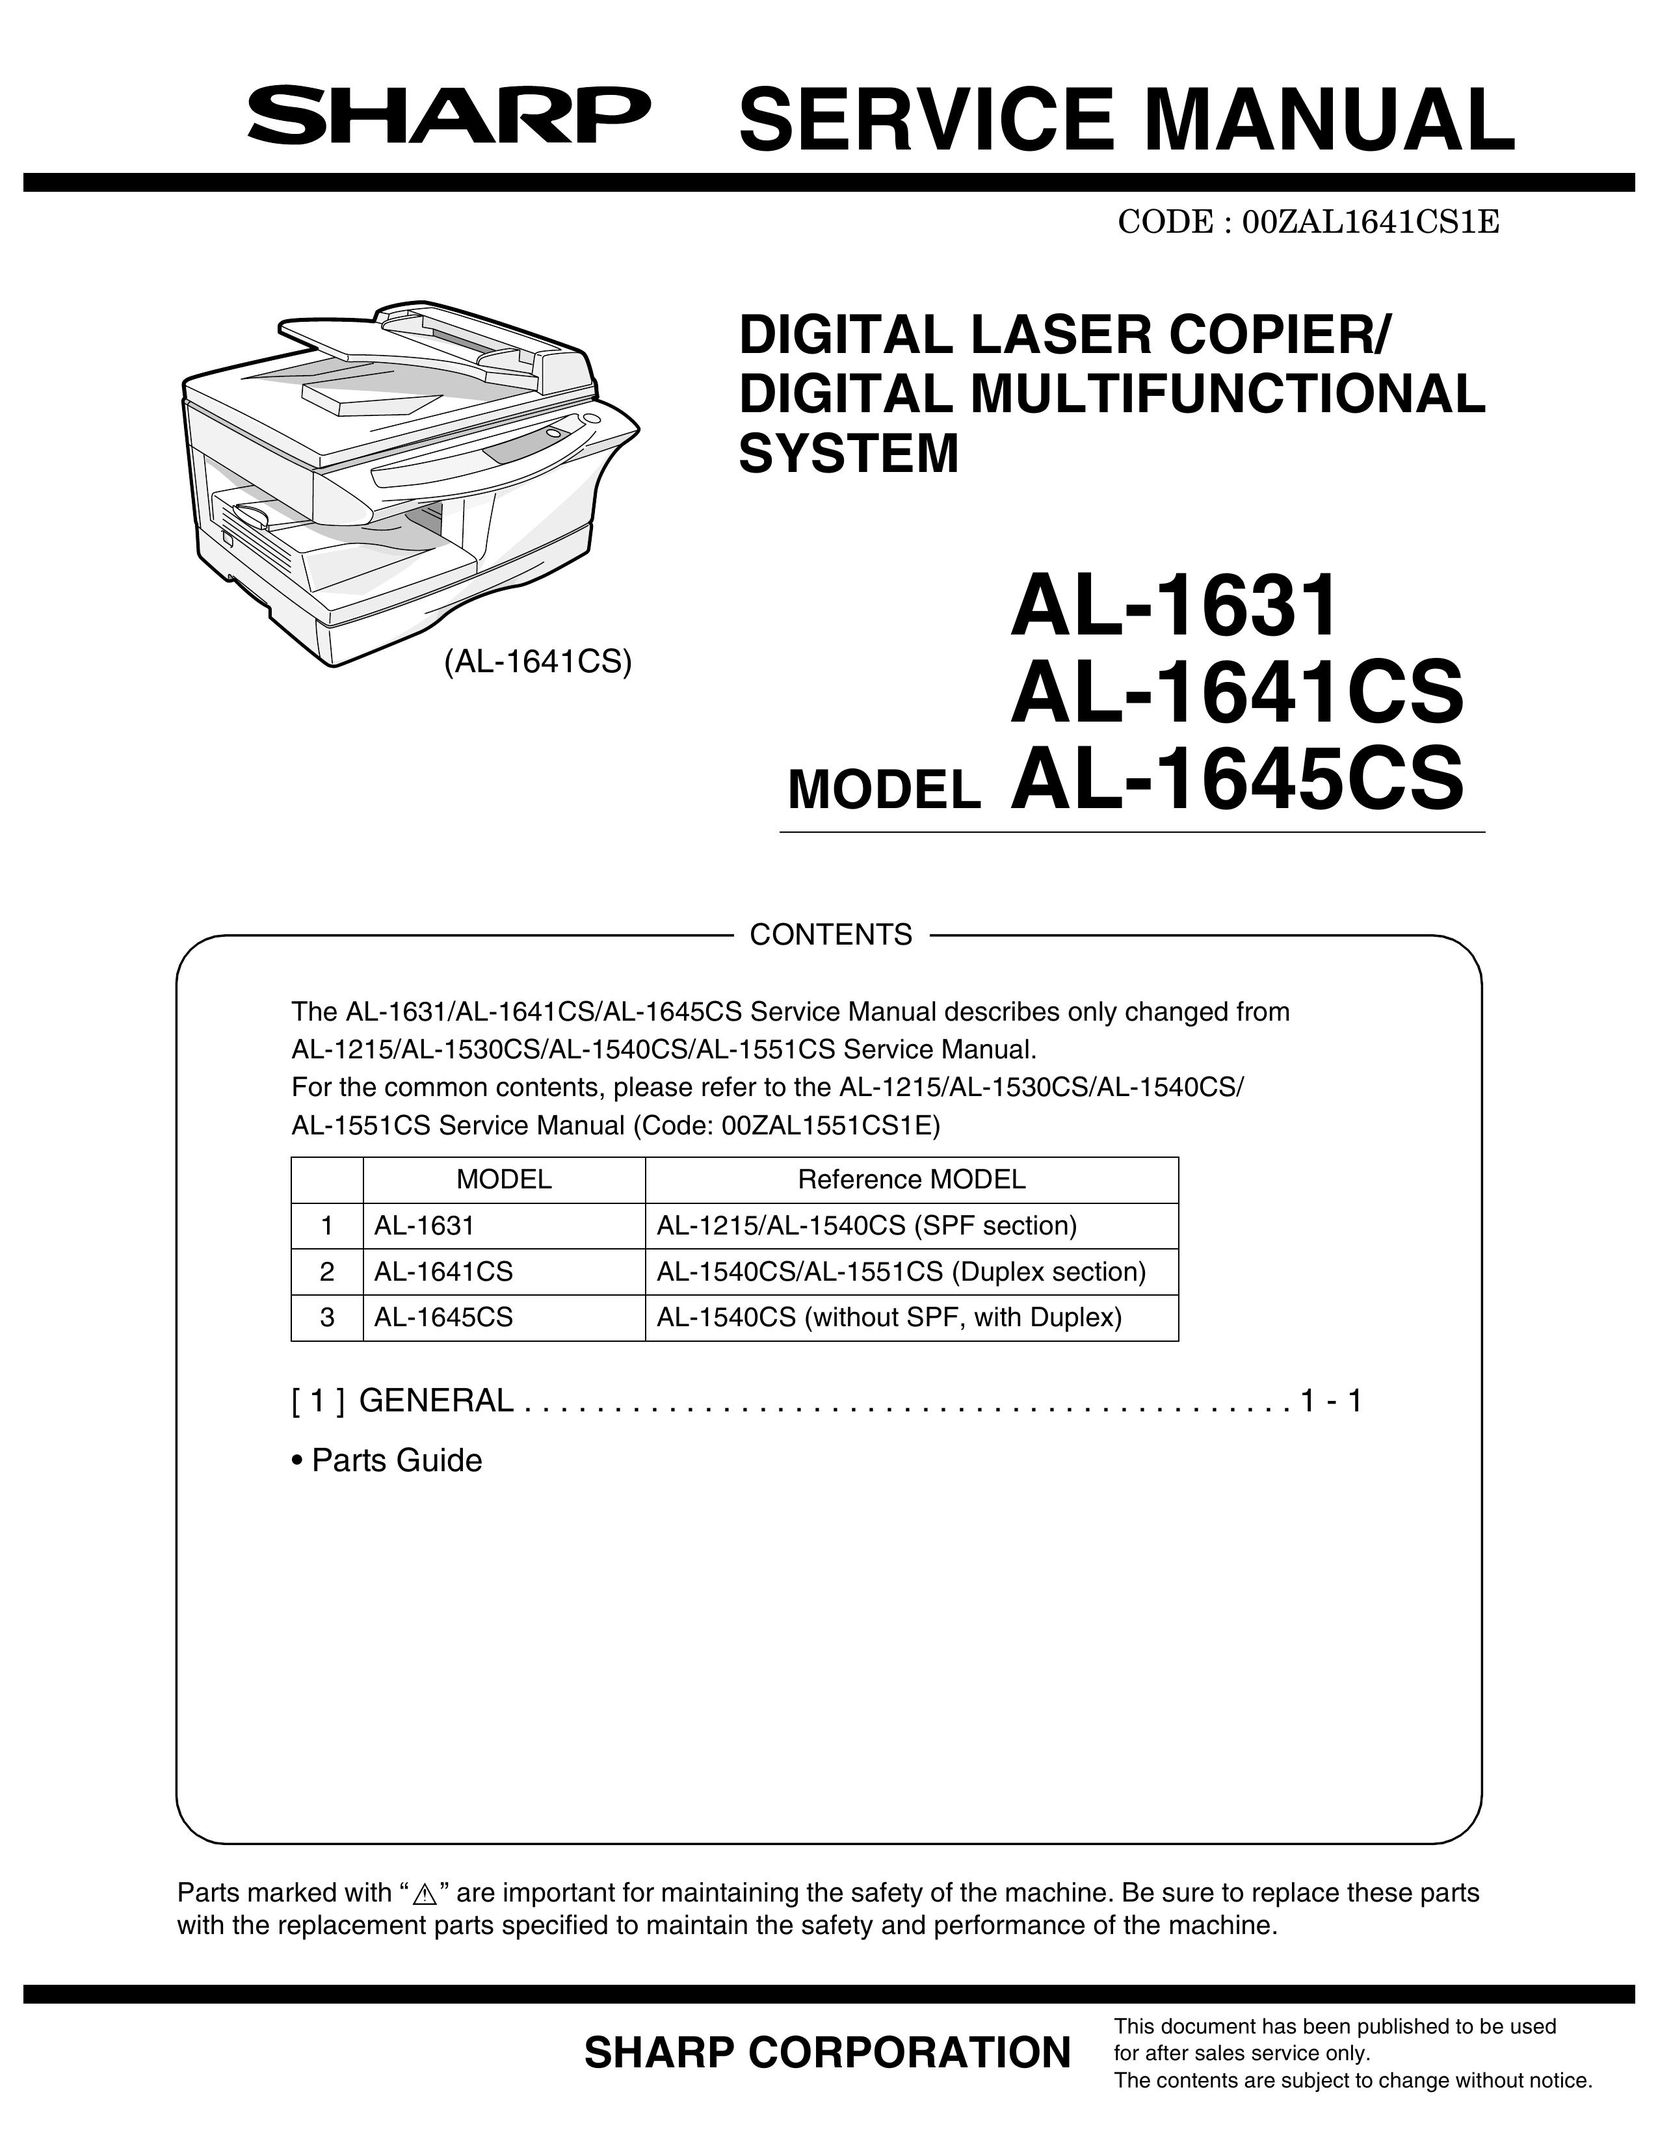 Sharp AL-1645CS Copier User Manual